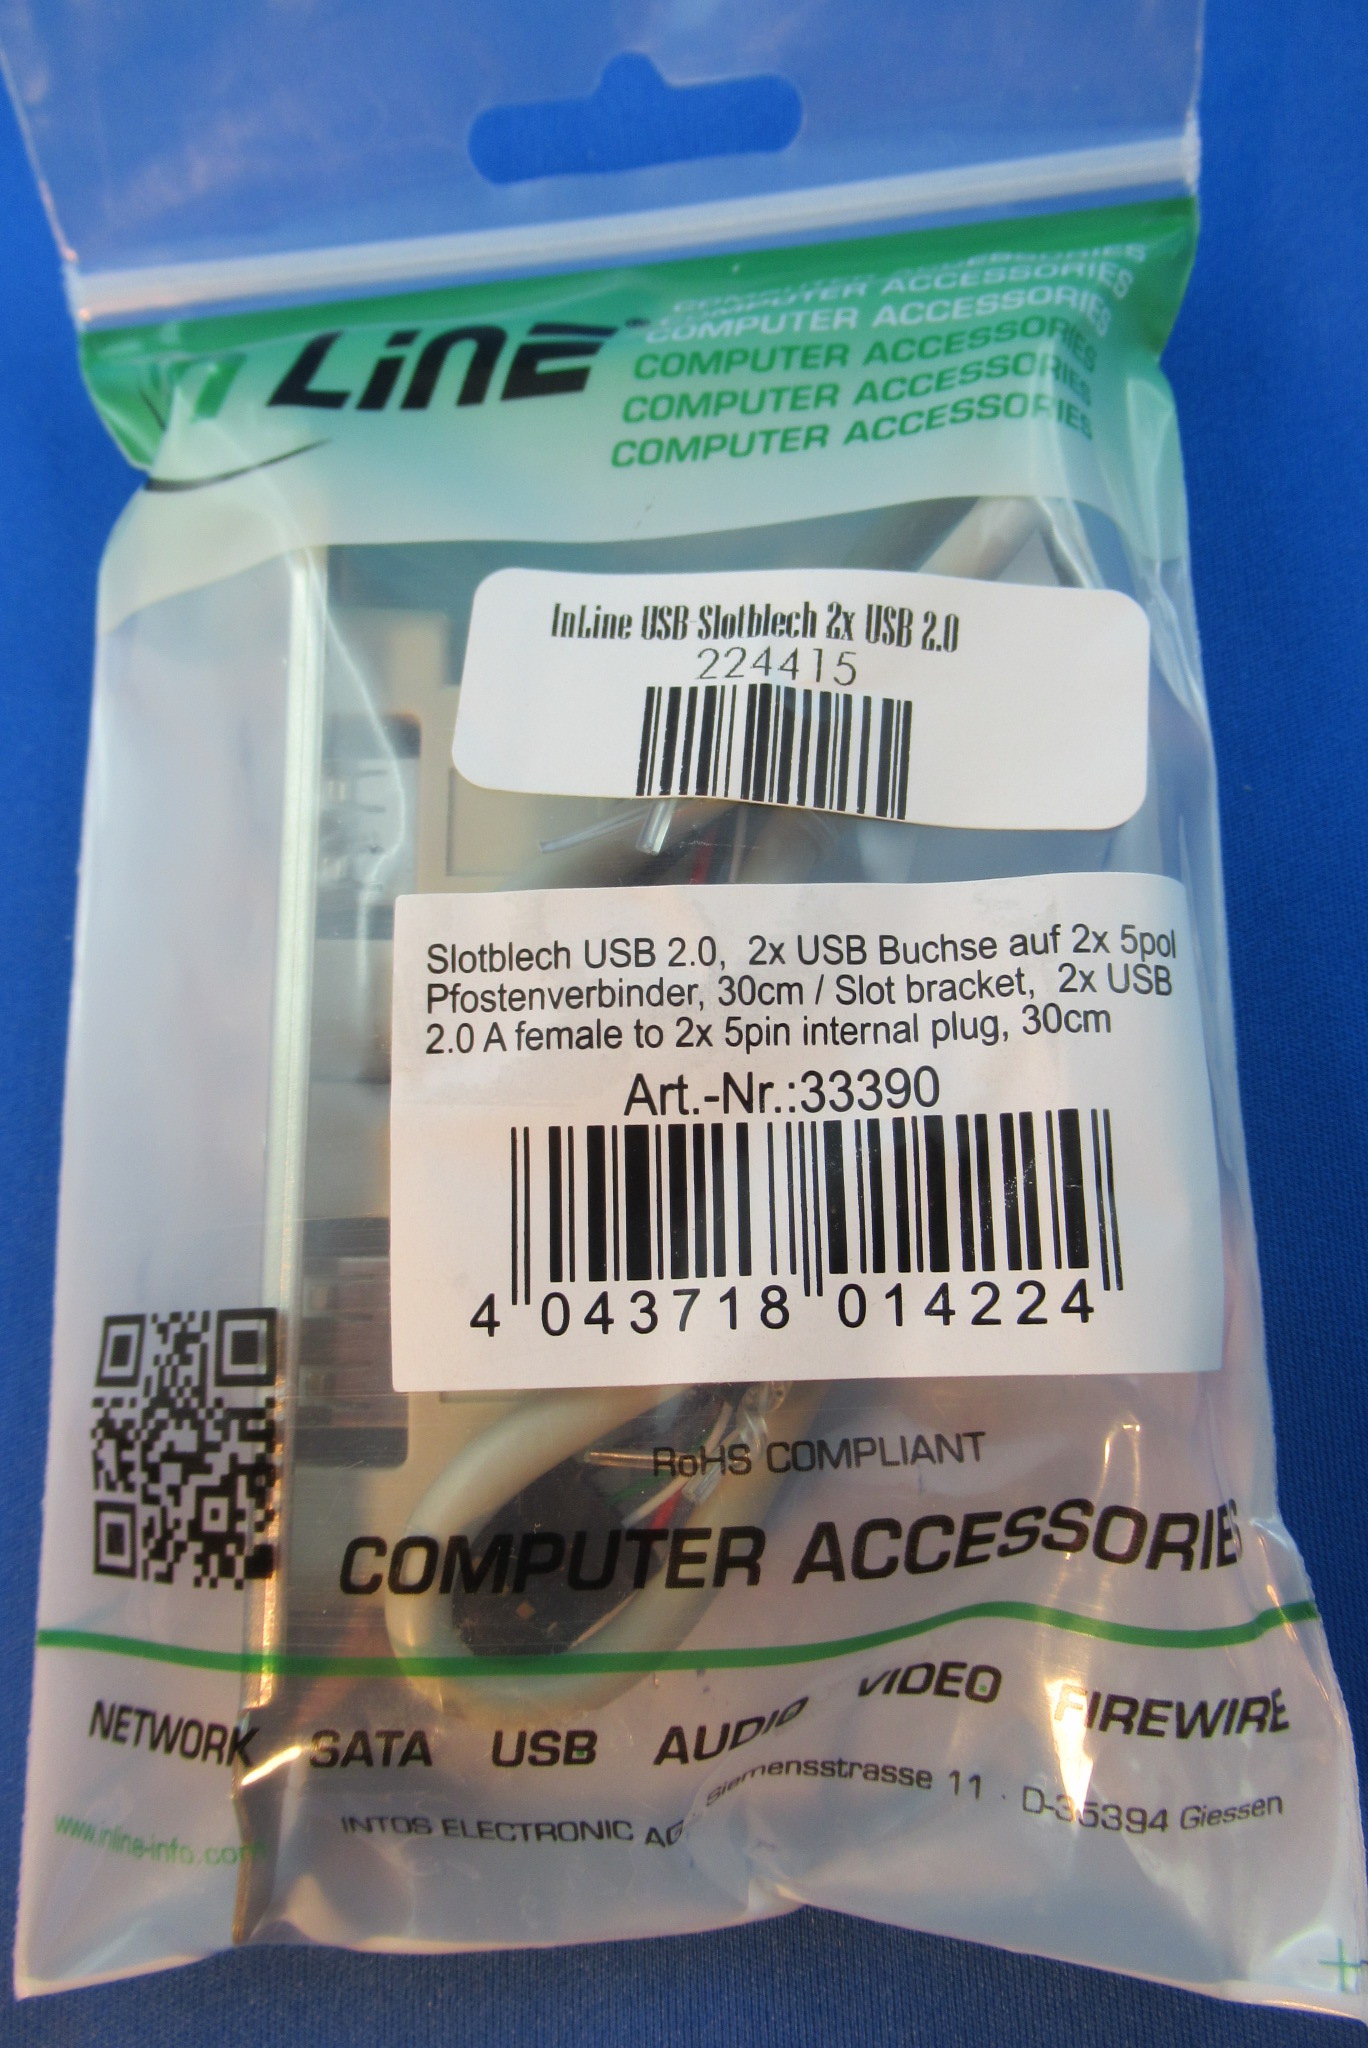 InLine USB-Slotblech 2x USB 2.0 INTOS 33390